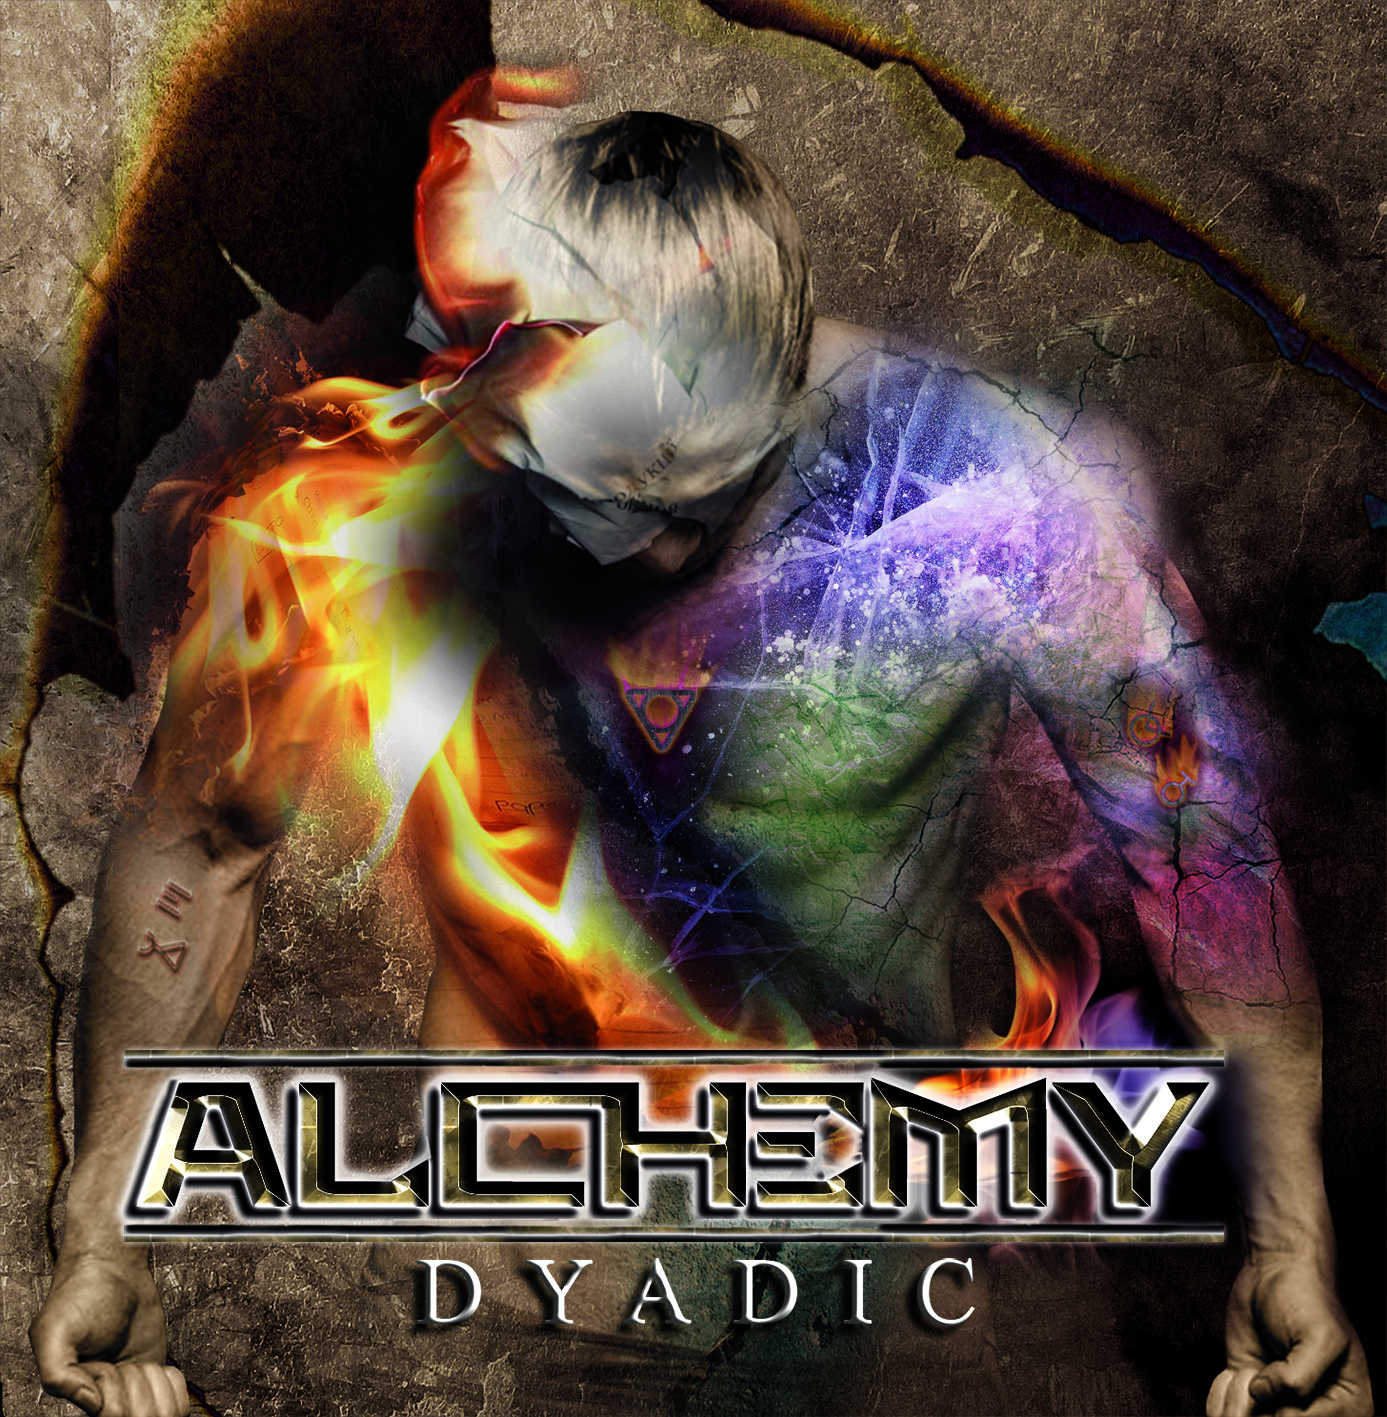 ALCHEMY - Dyadic - Cover art.jpg